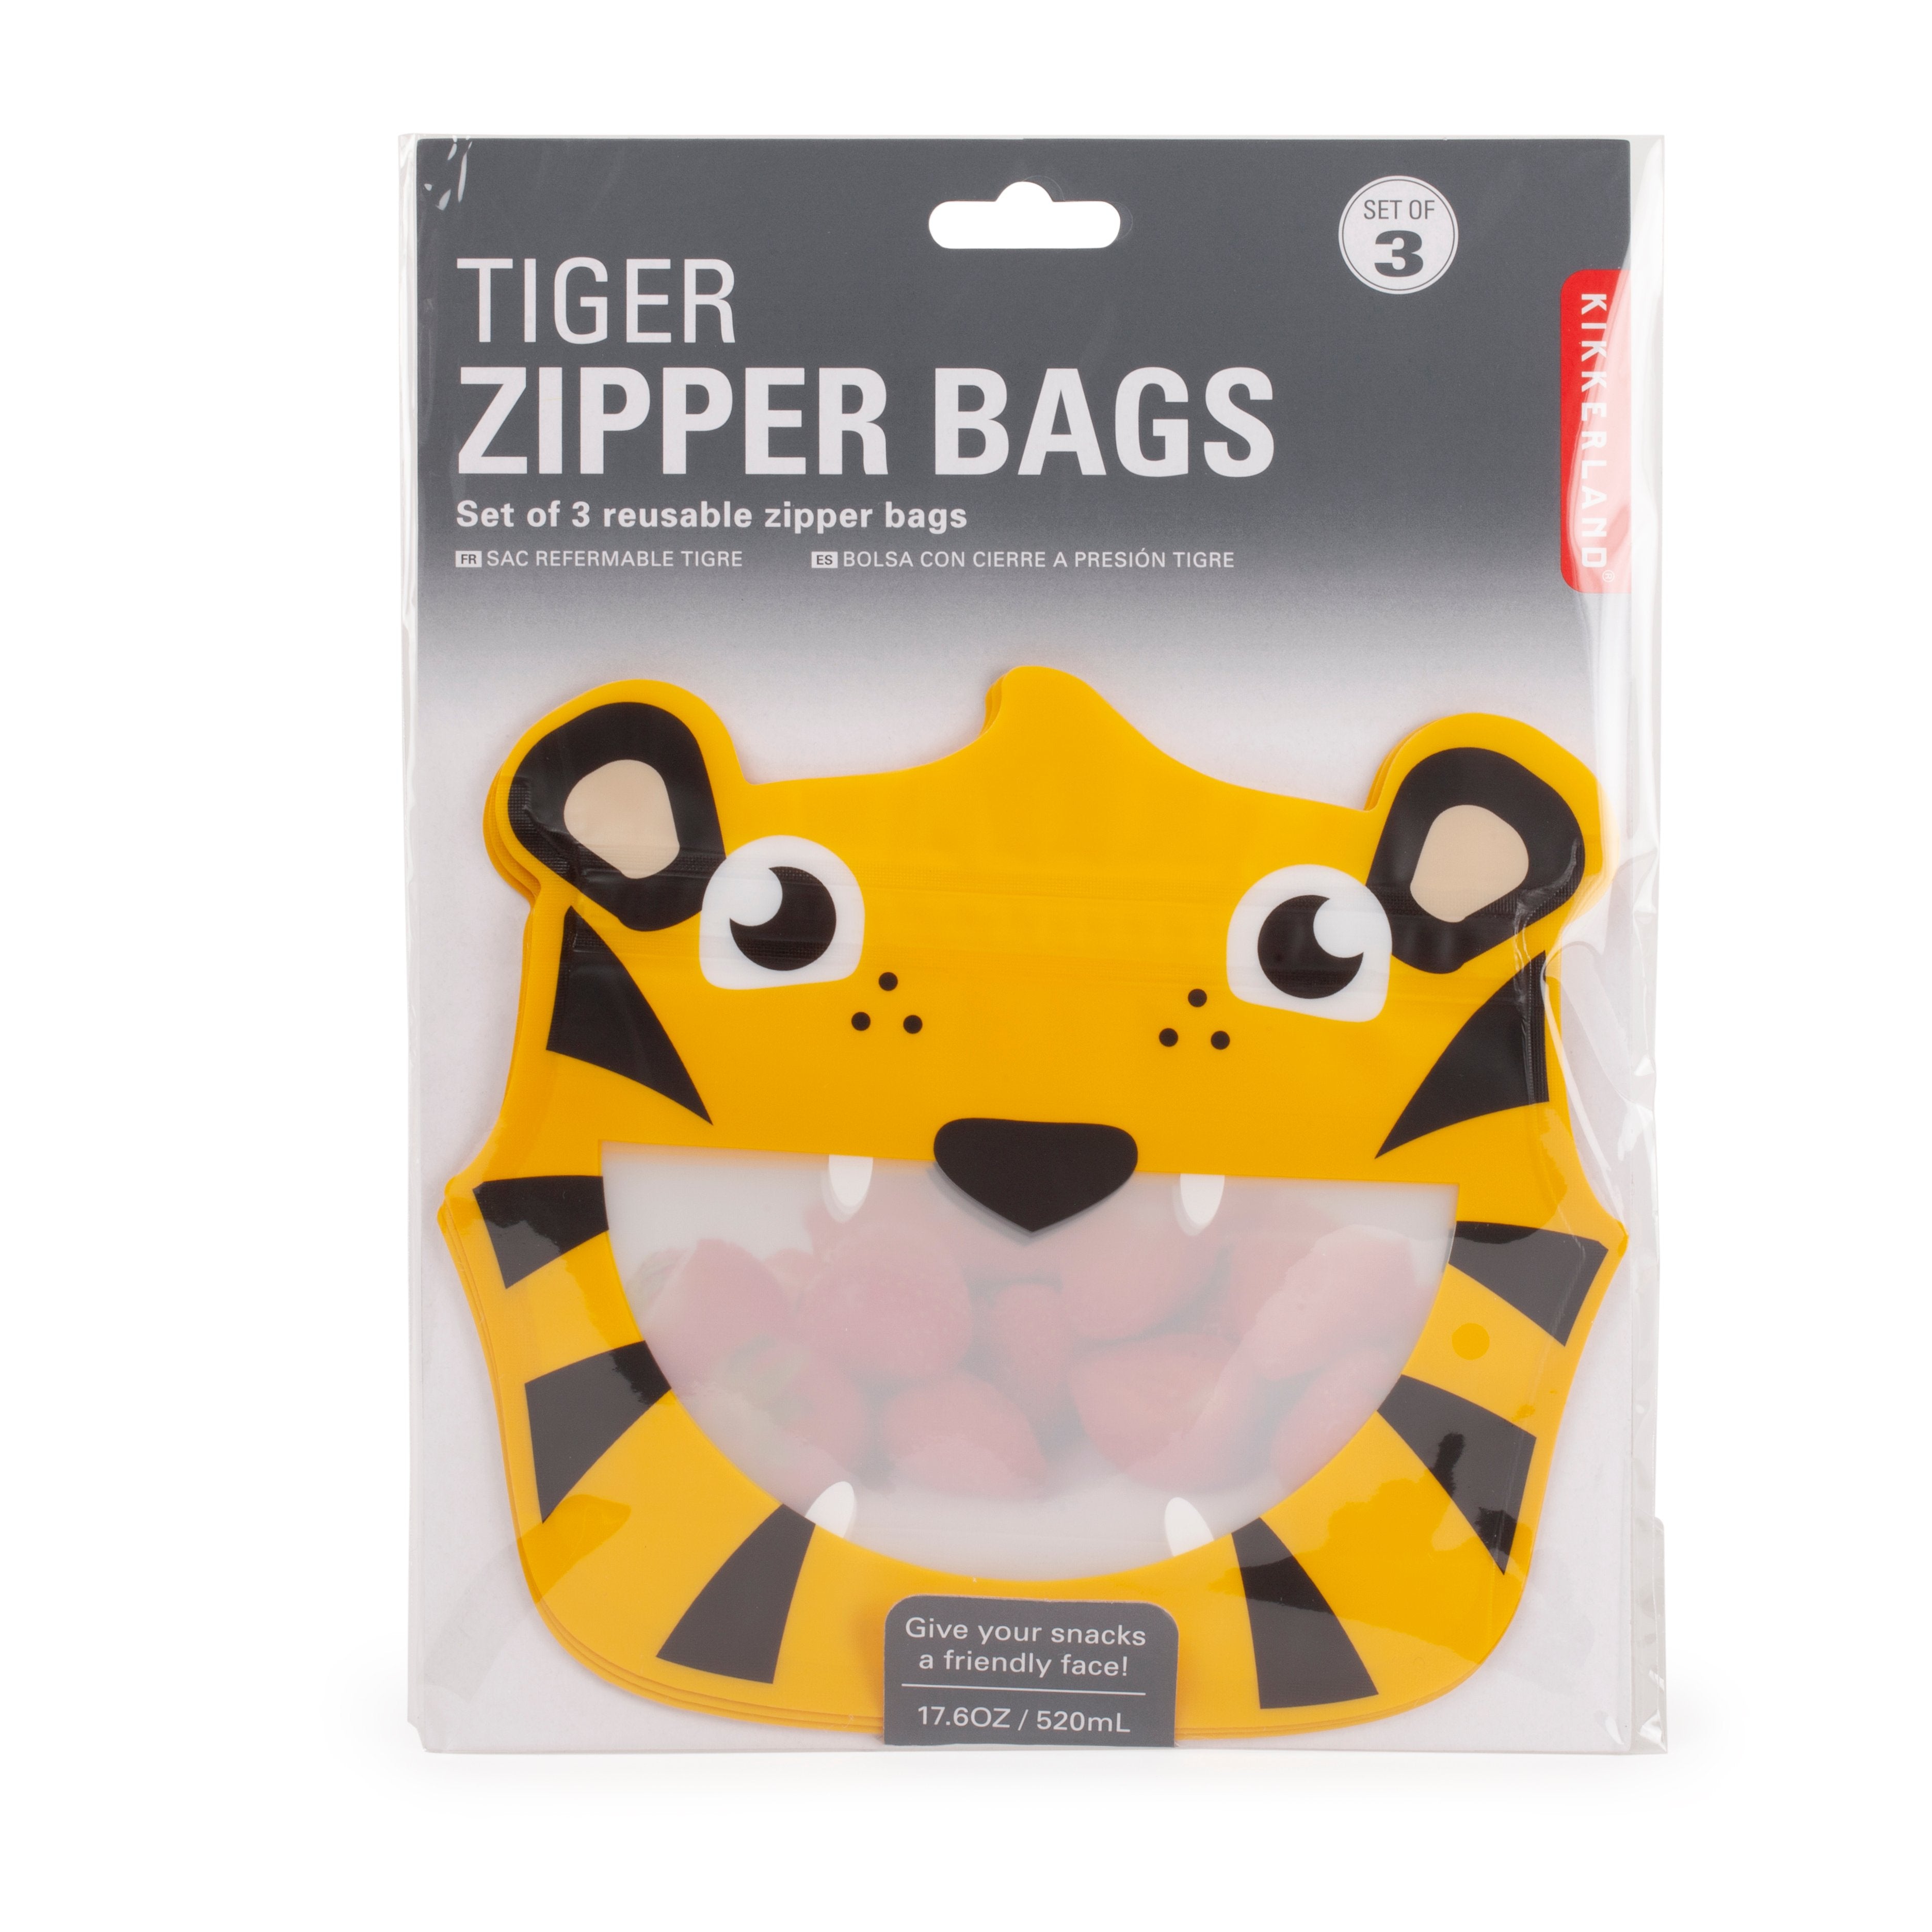 Tiger reusable zipper bags